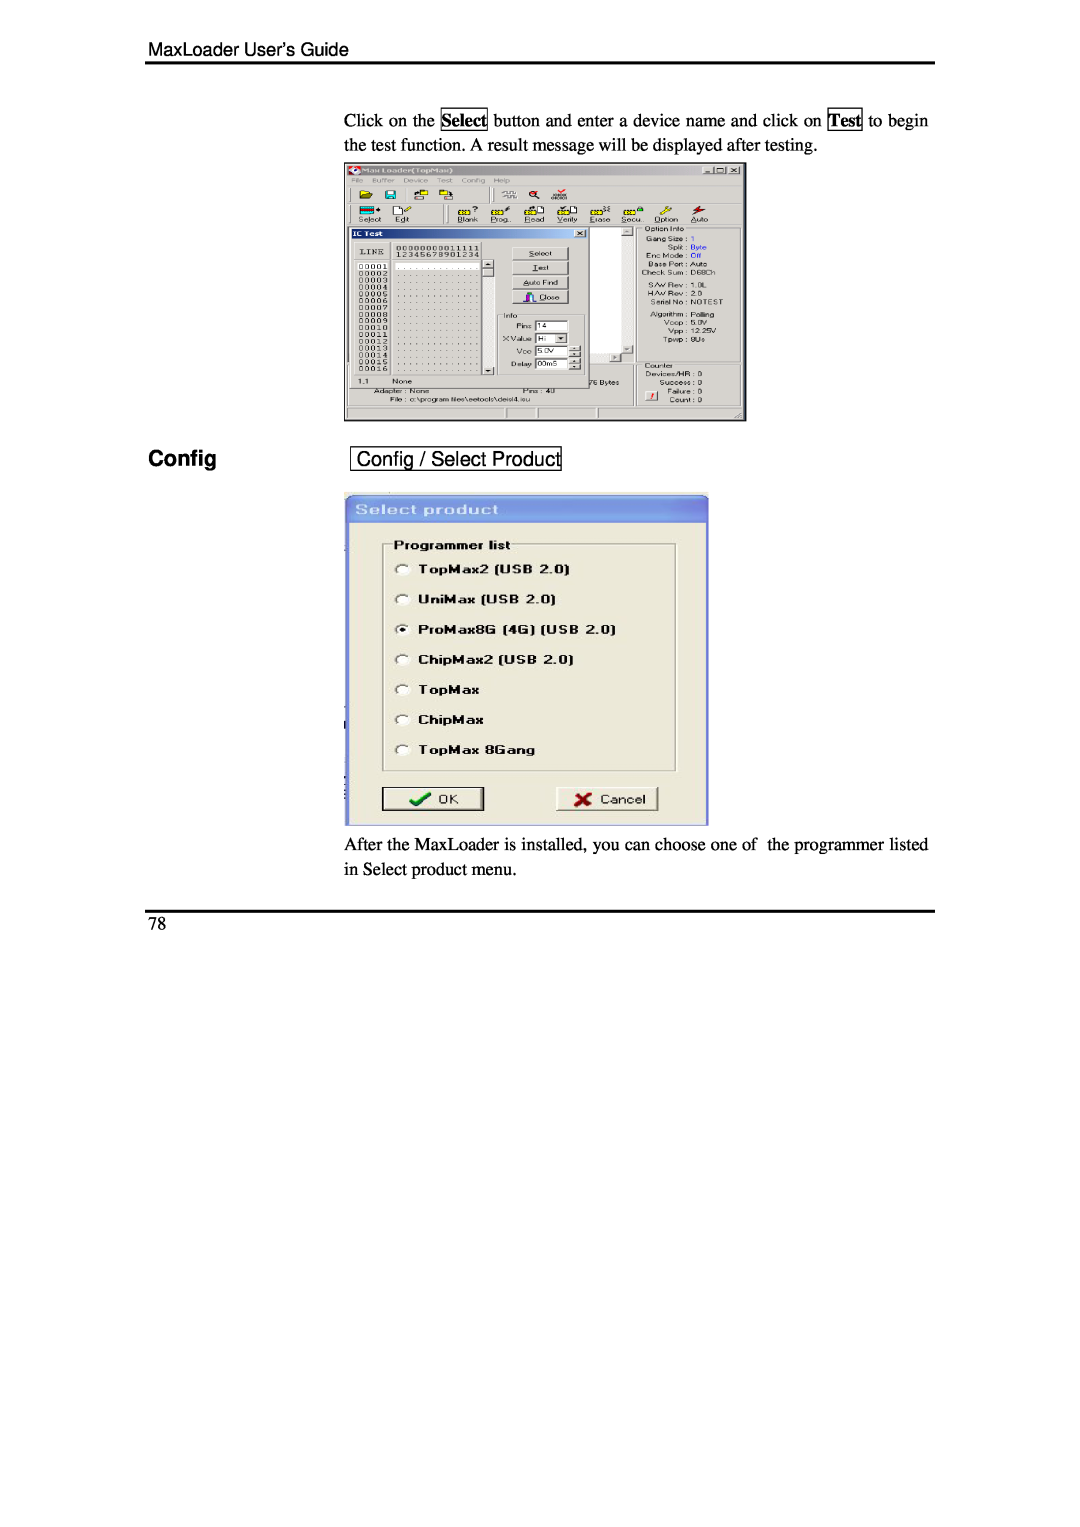 IBM MaxLoader manual Config / Select Product, Test 